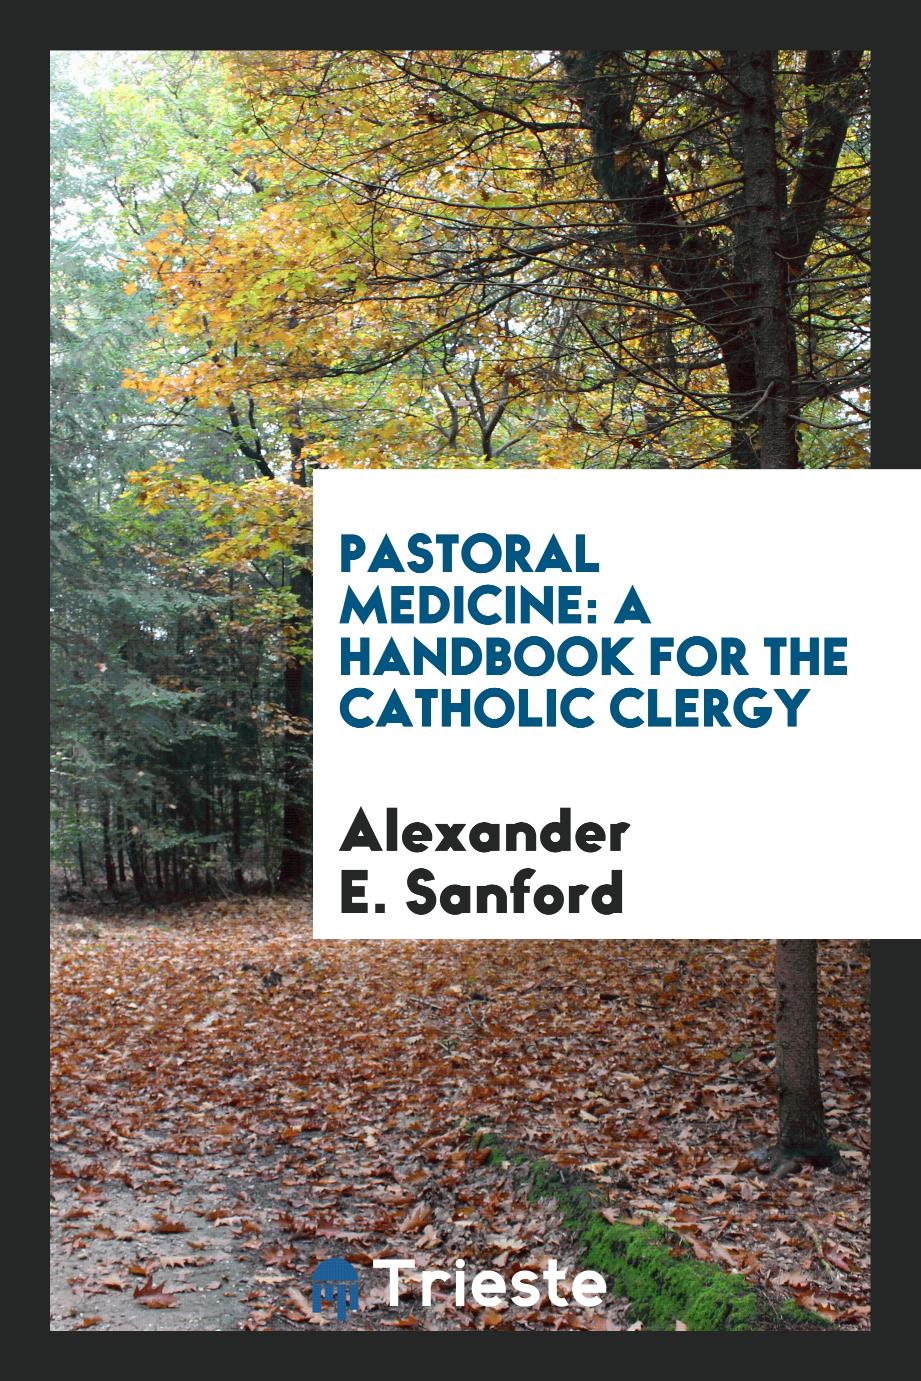 Pastoral medicine: a handbook for the Catholic clergy